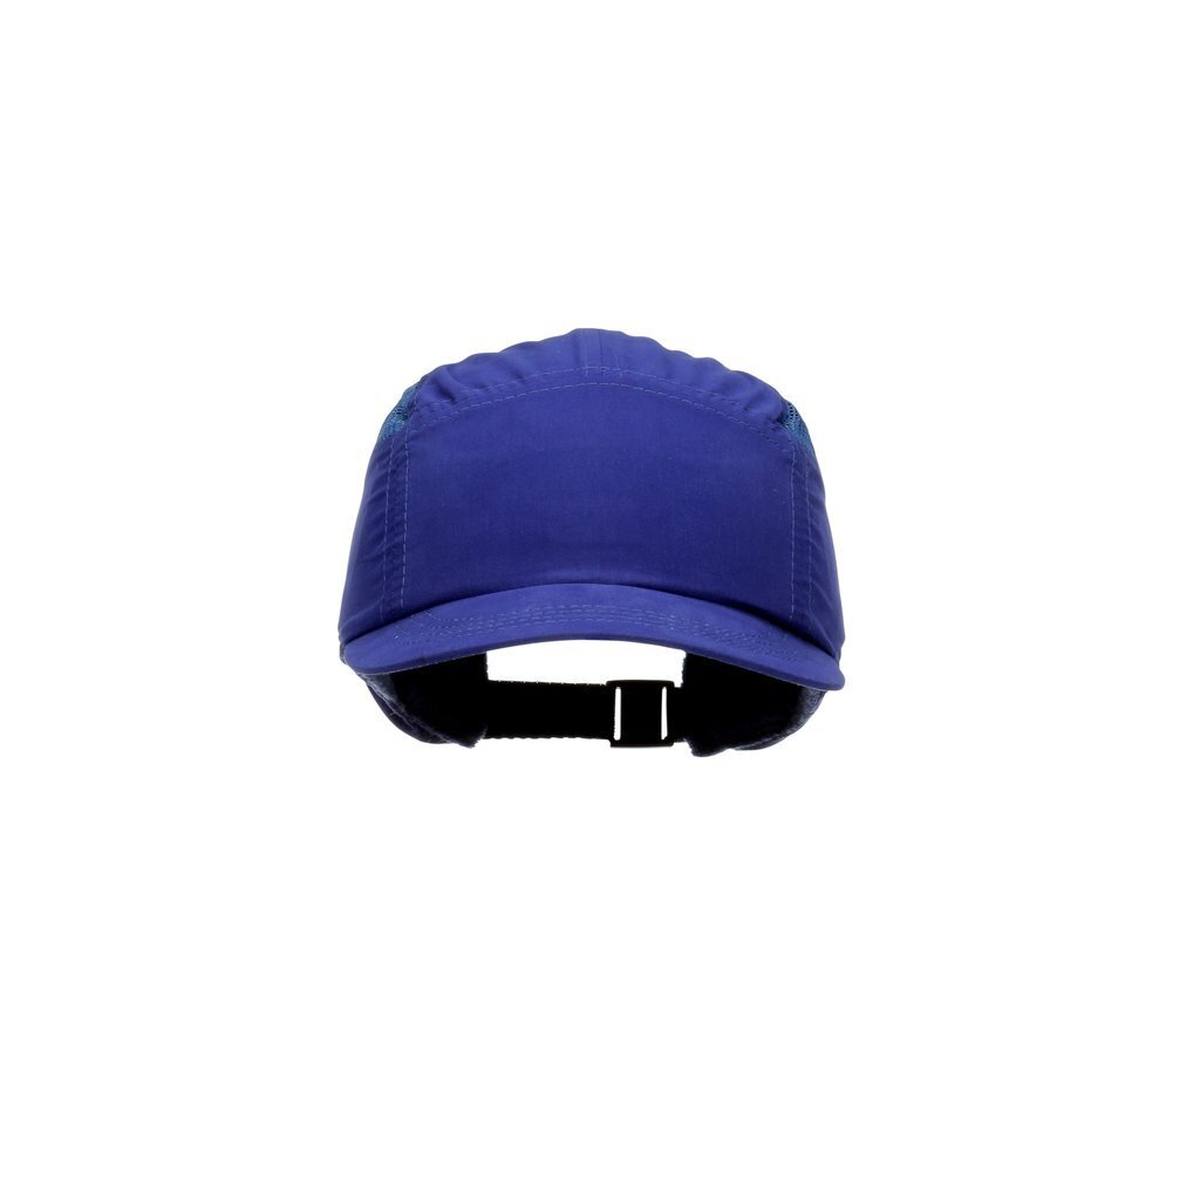 3M First Base Plus - Bump cap in royal blue - shortened peak 55 mm, EN812